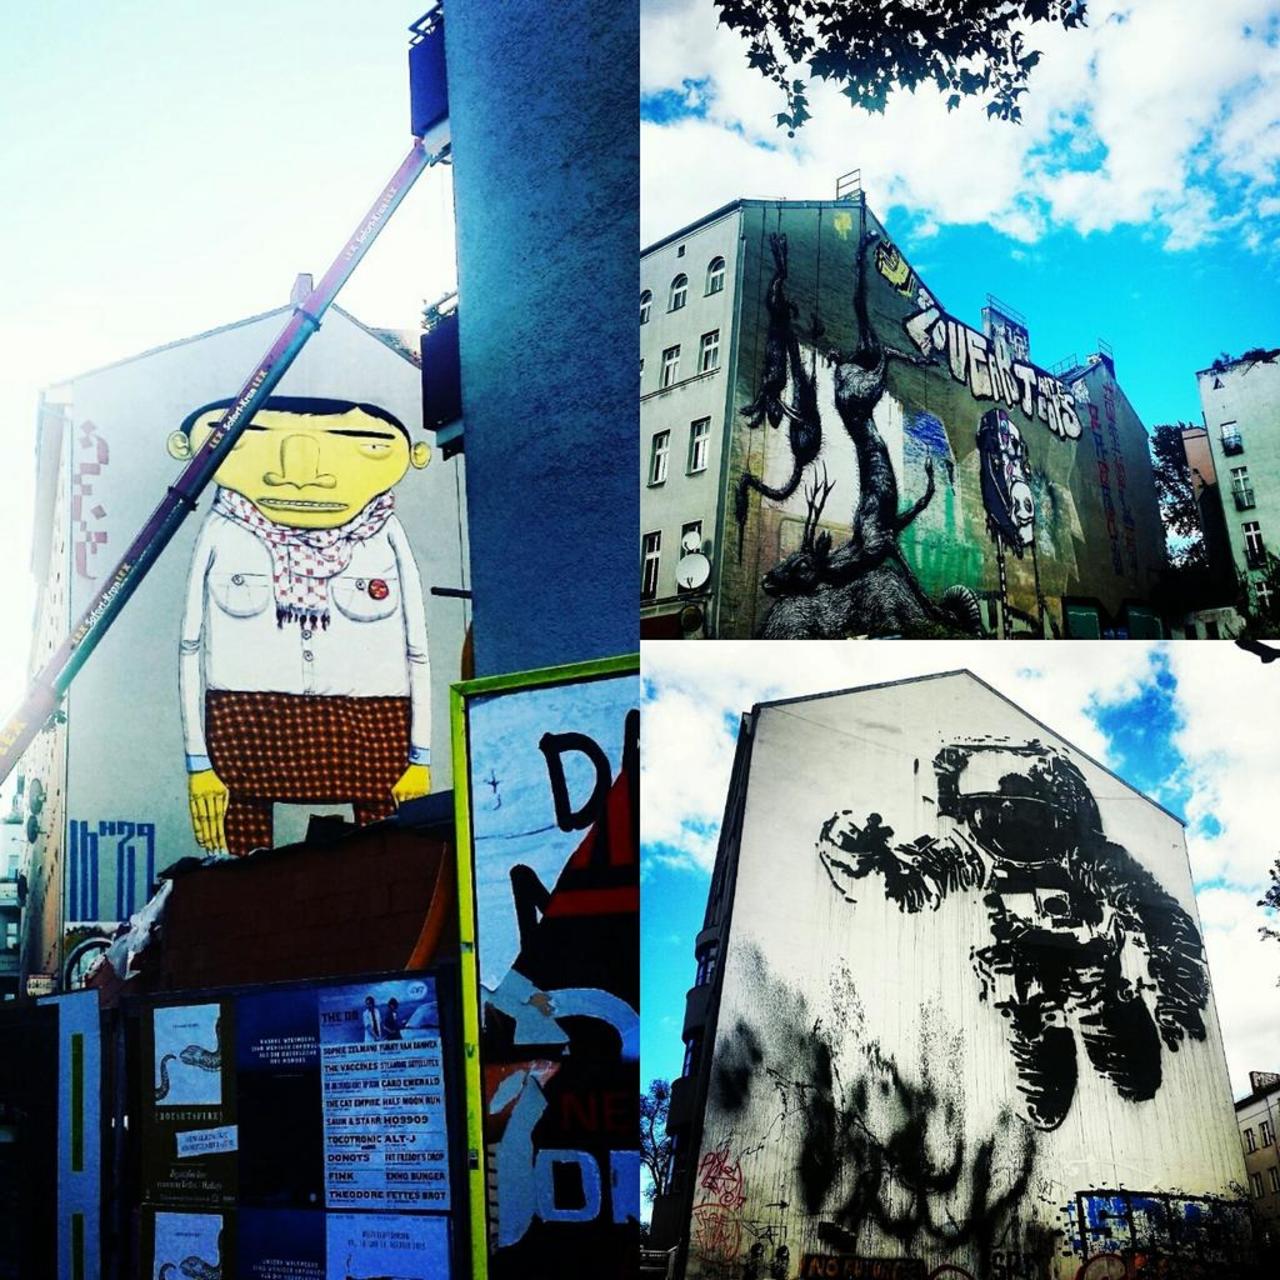 Berlin Street Art - Astronaut Cosmonaut, Hanging Dead Animals and Os Gemeos. #Berlin #graffiti #streetart http://t.co/yM7R2aDTH2